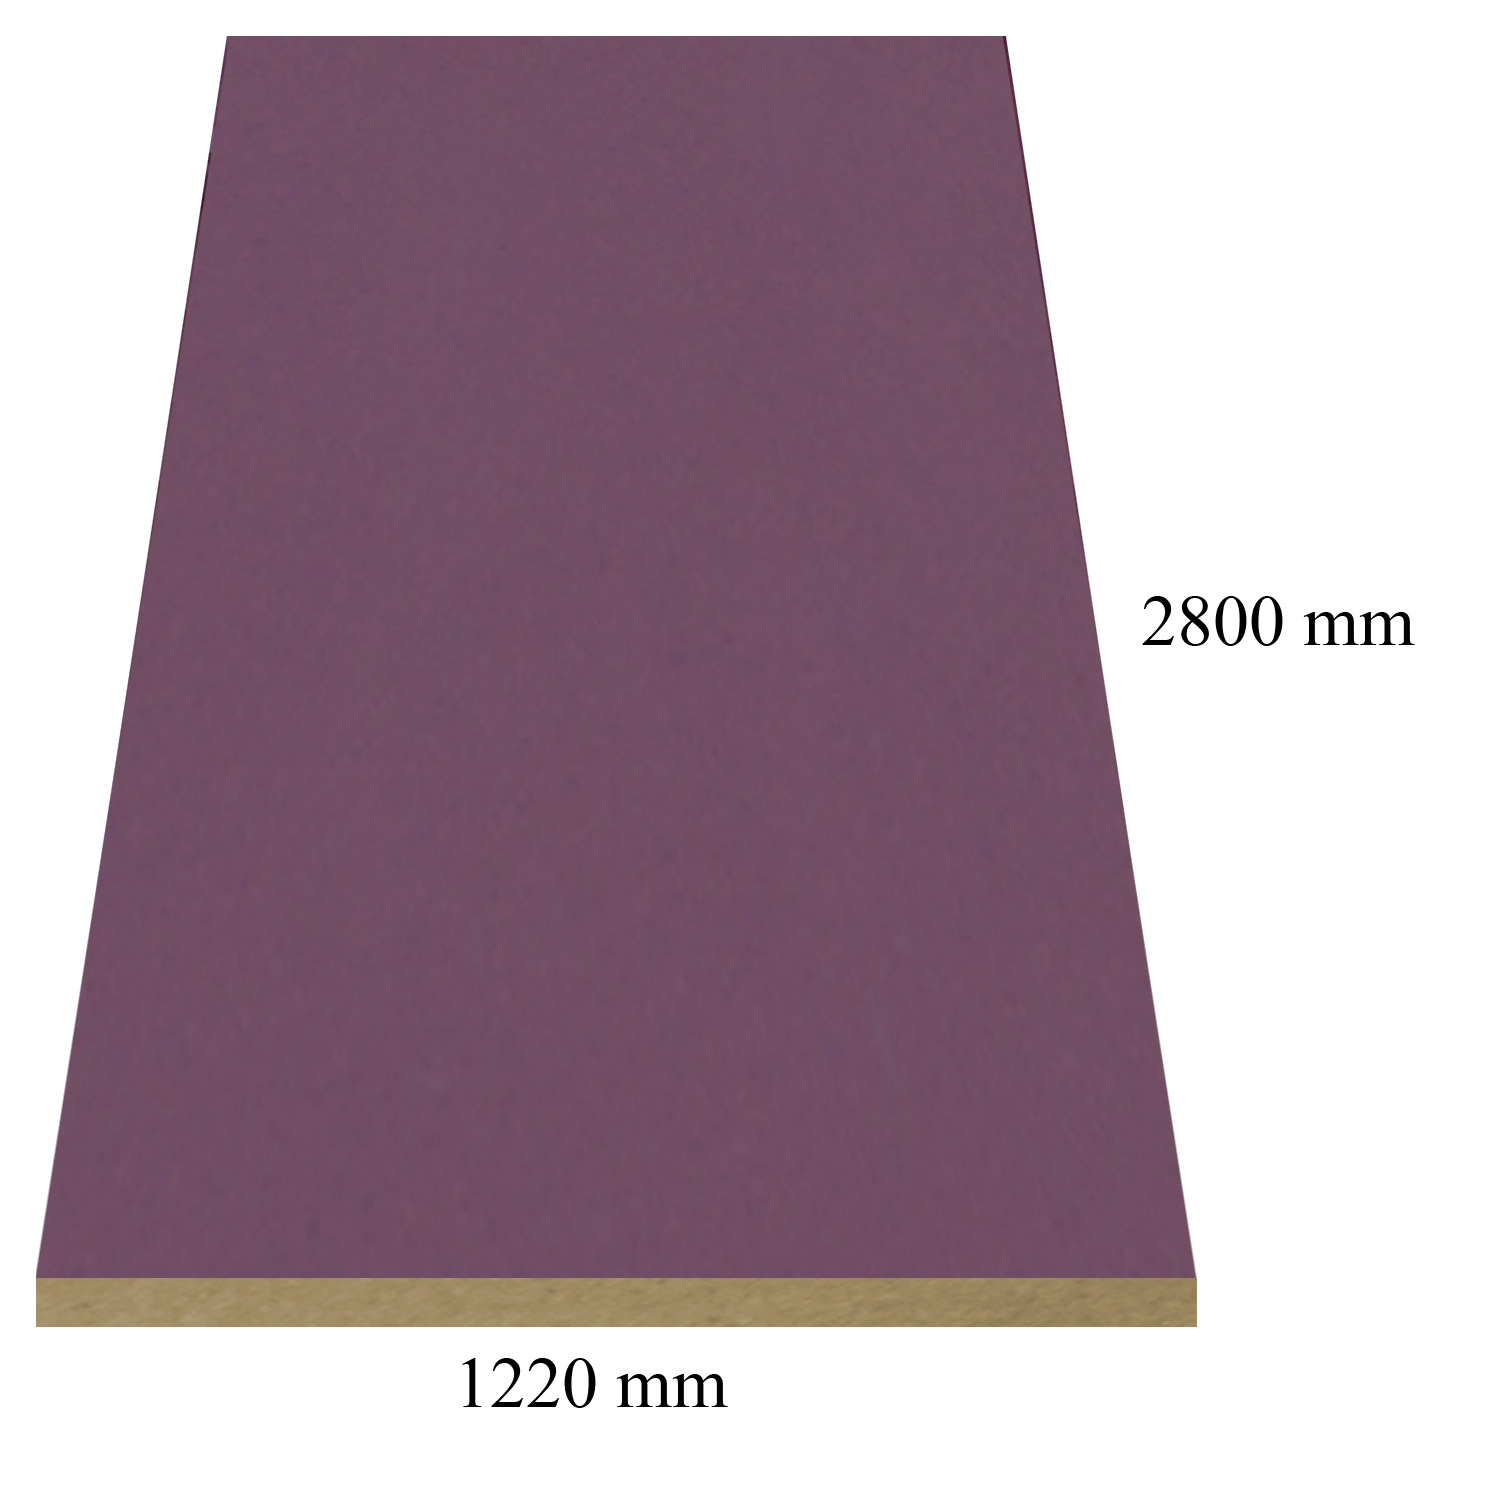 493.2 HG Dark Purple - PVC coated 18 mm MDF #